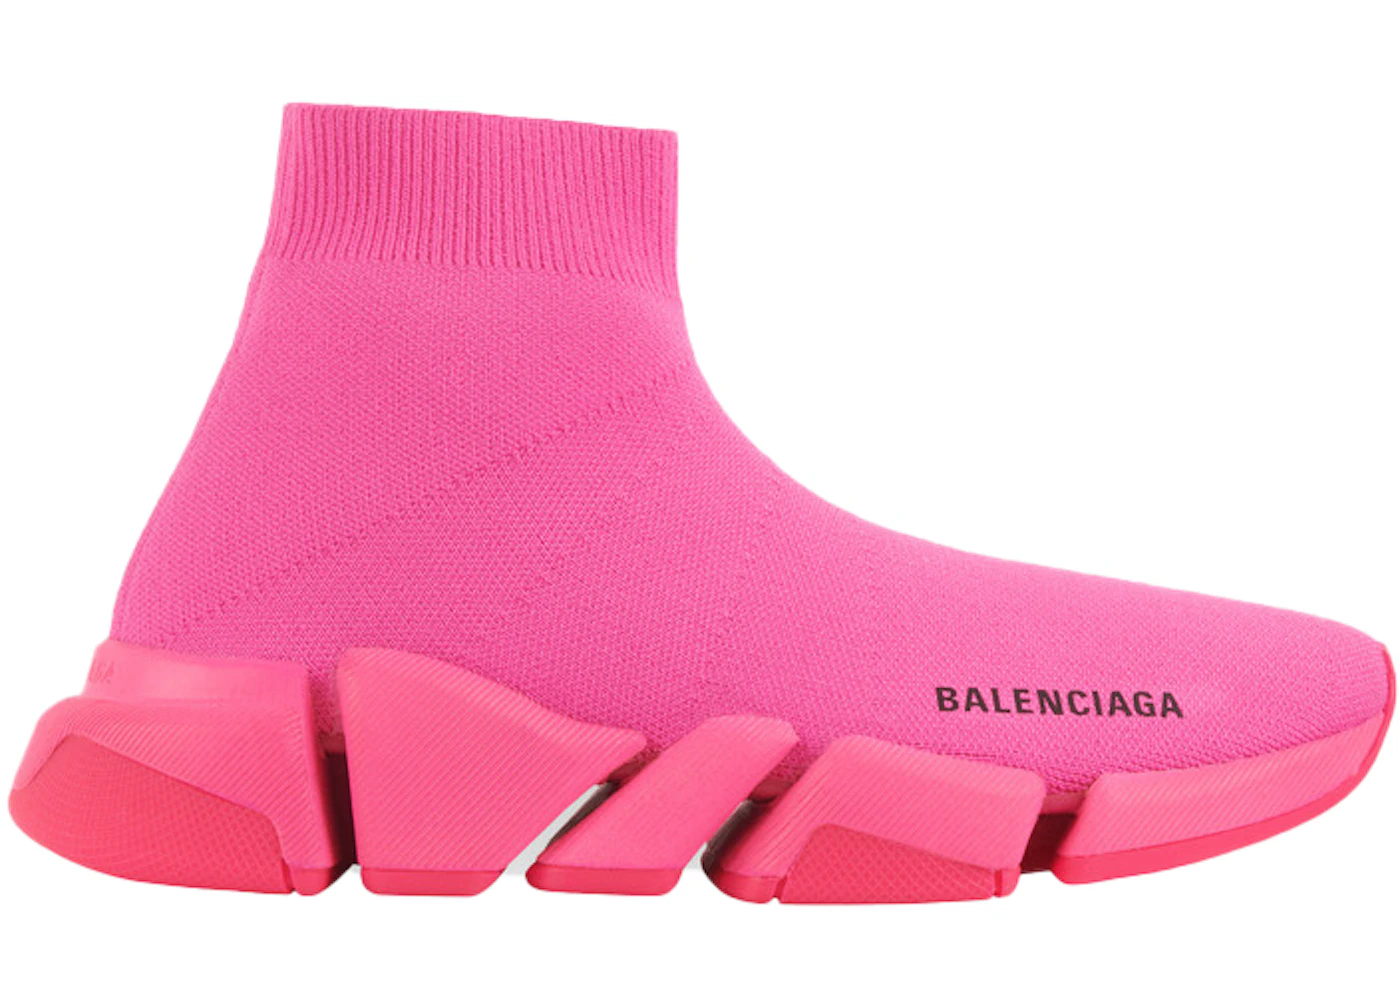 Balenciaga Speed 2.0 Neon Pink (Women's) - 617196W17265800 - US